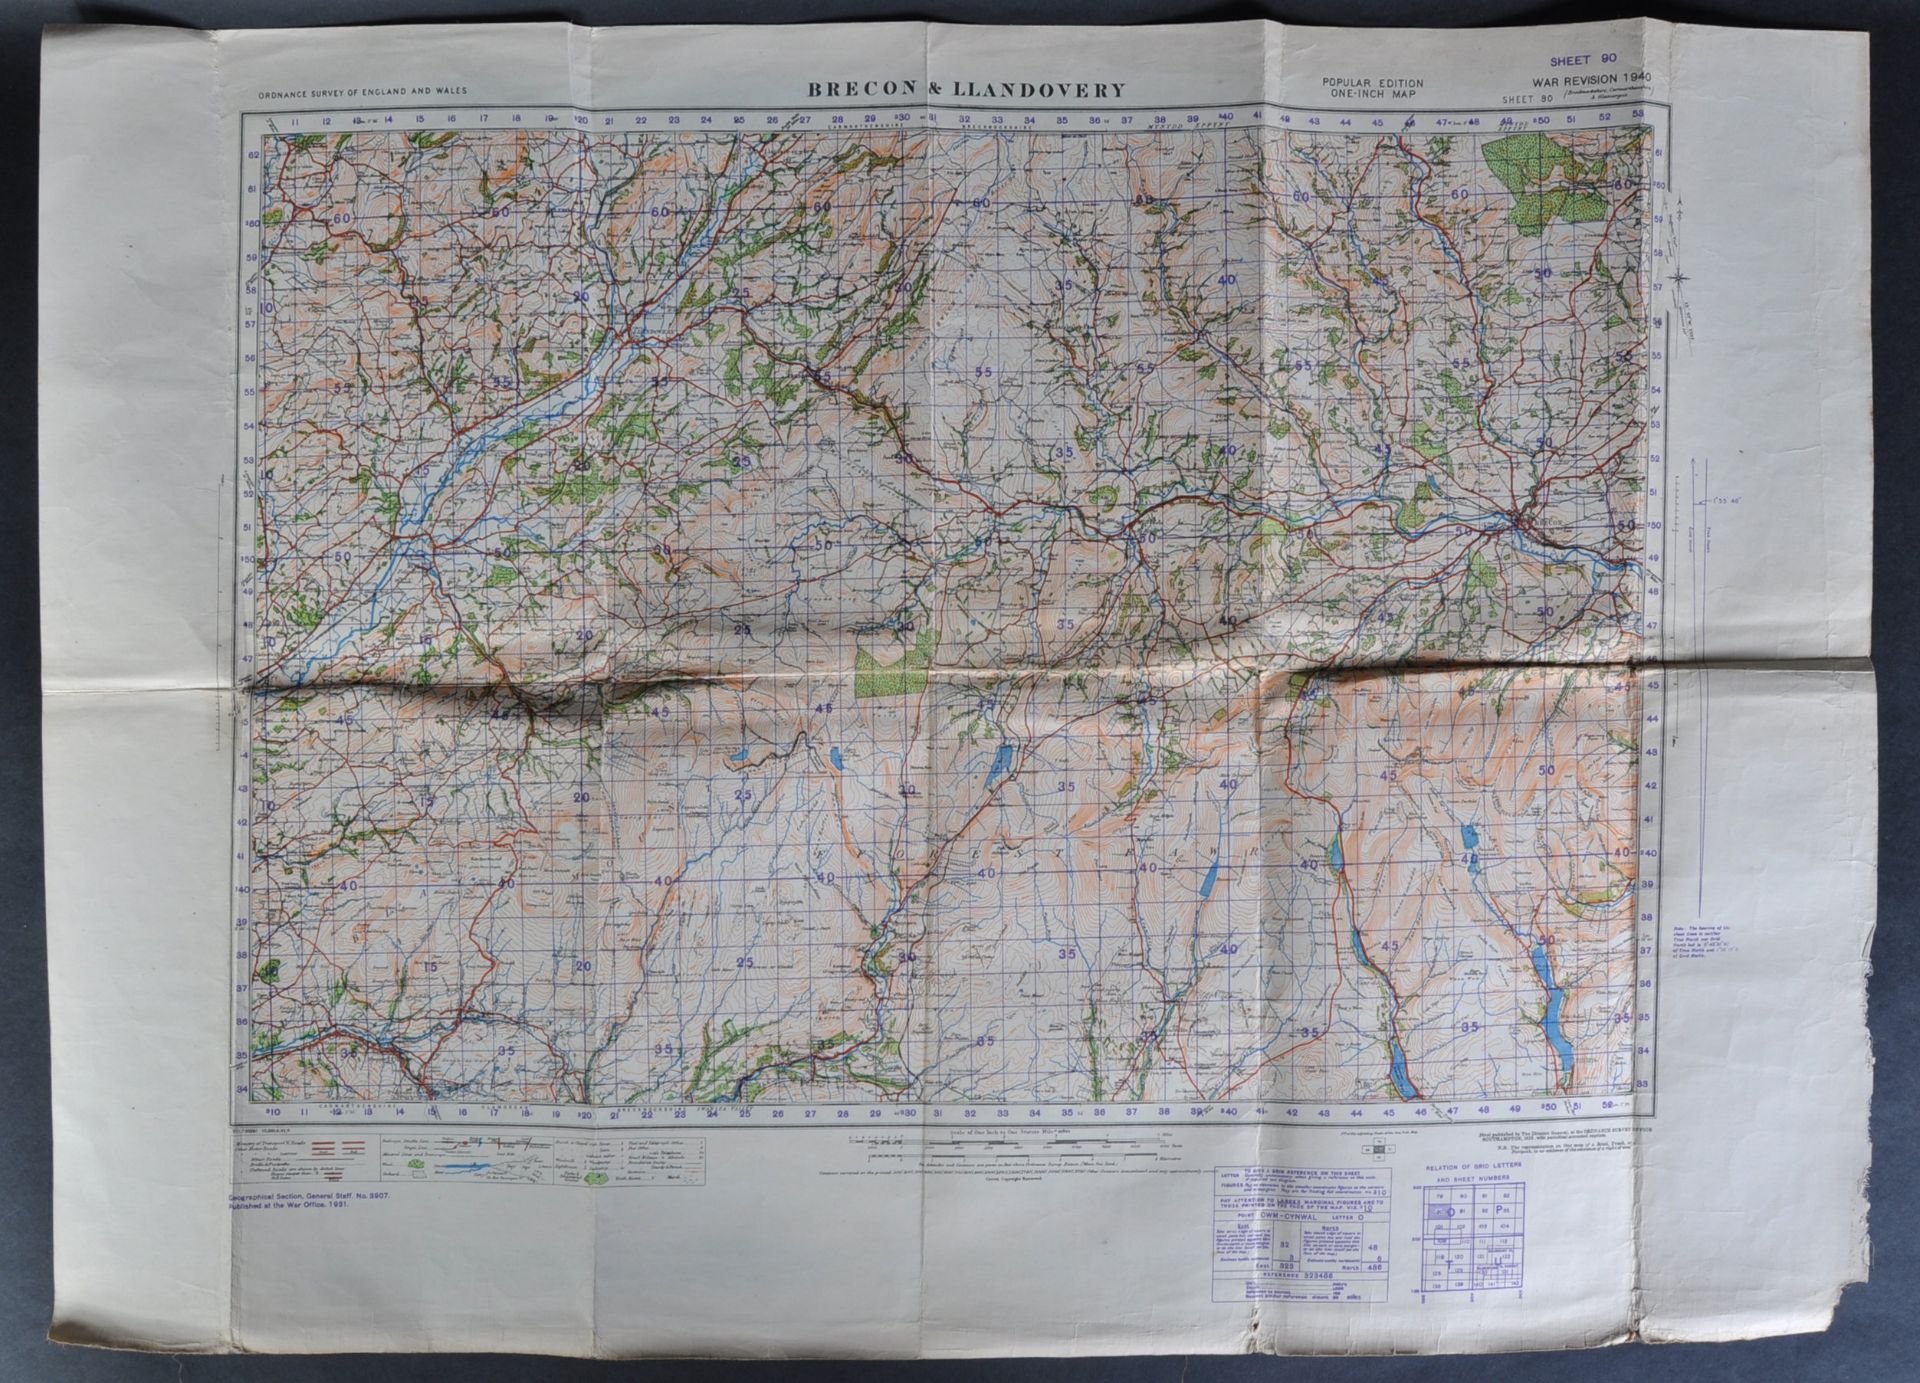 WWII SECOND WORLD WAR ORDNANCE SURVEY MAP - BRECON & LLANDOVERY